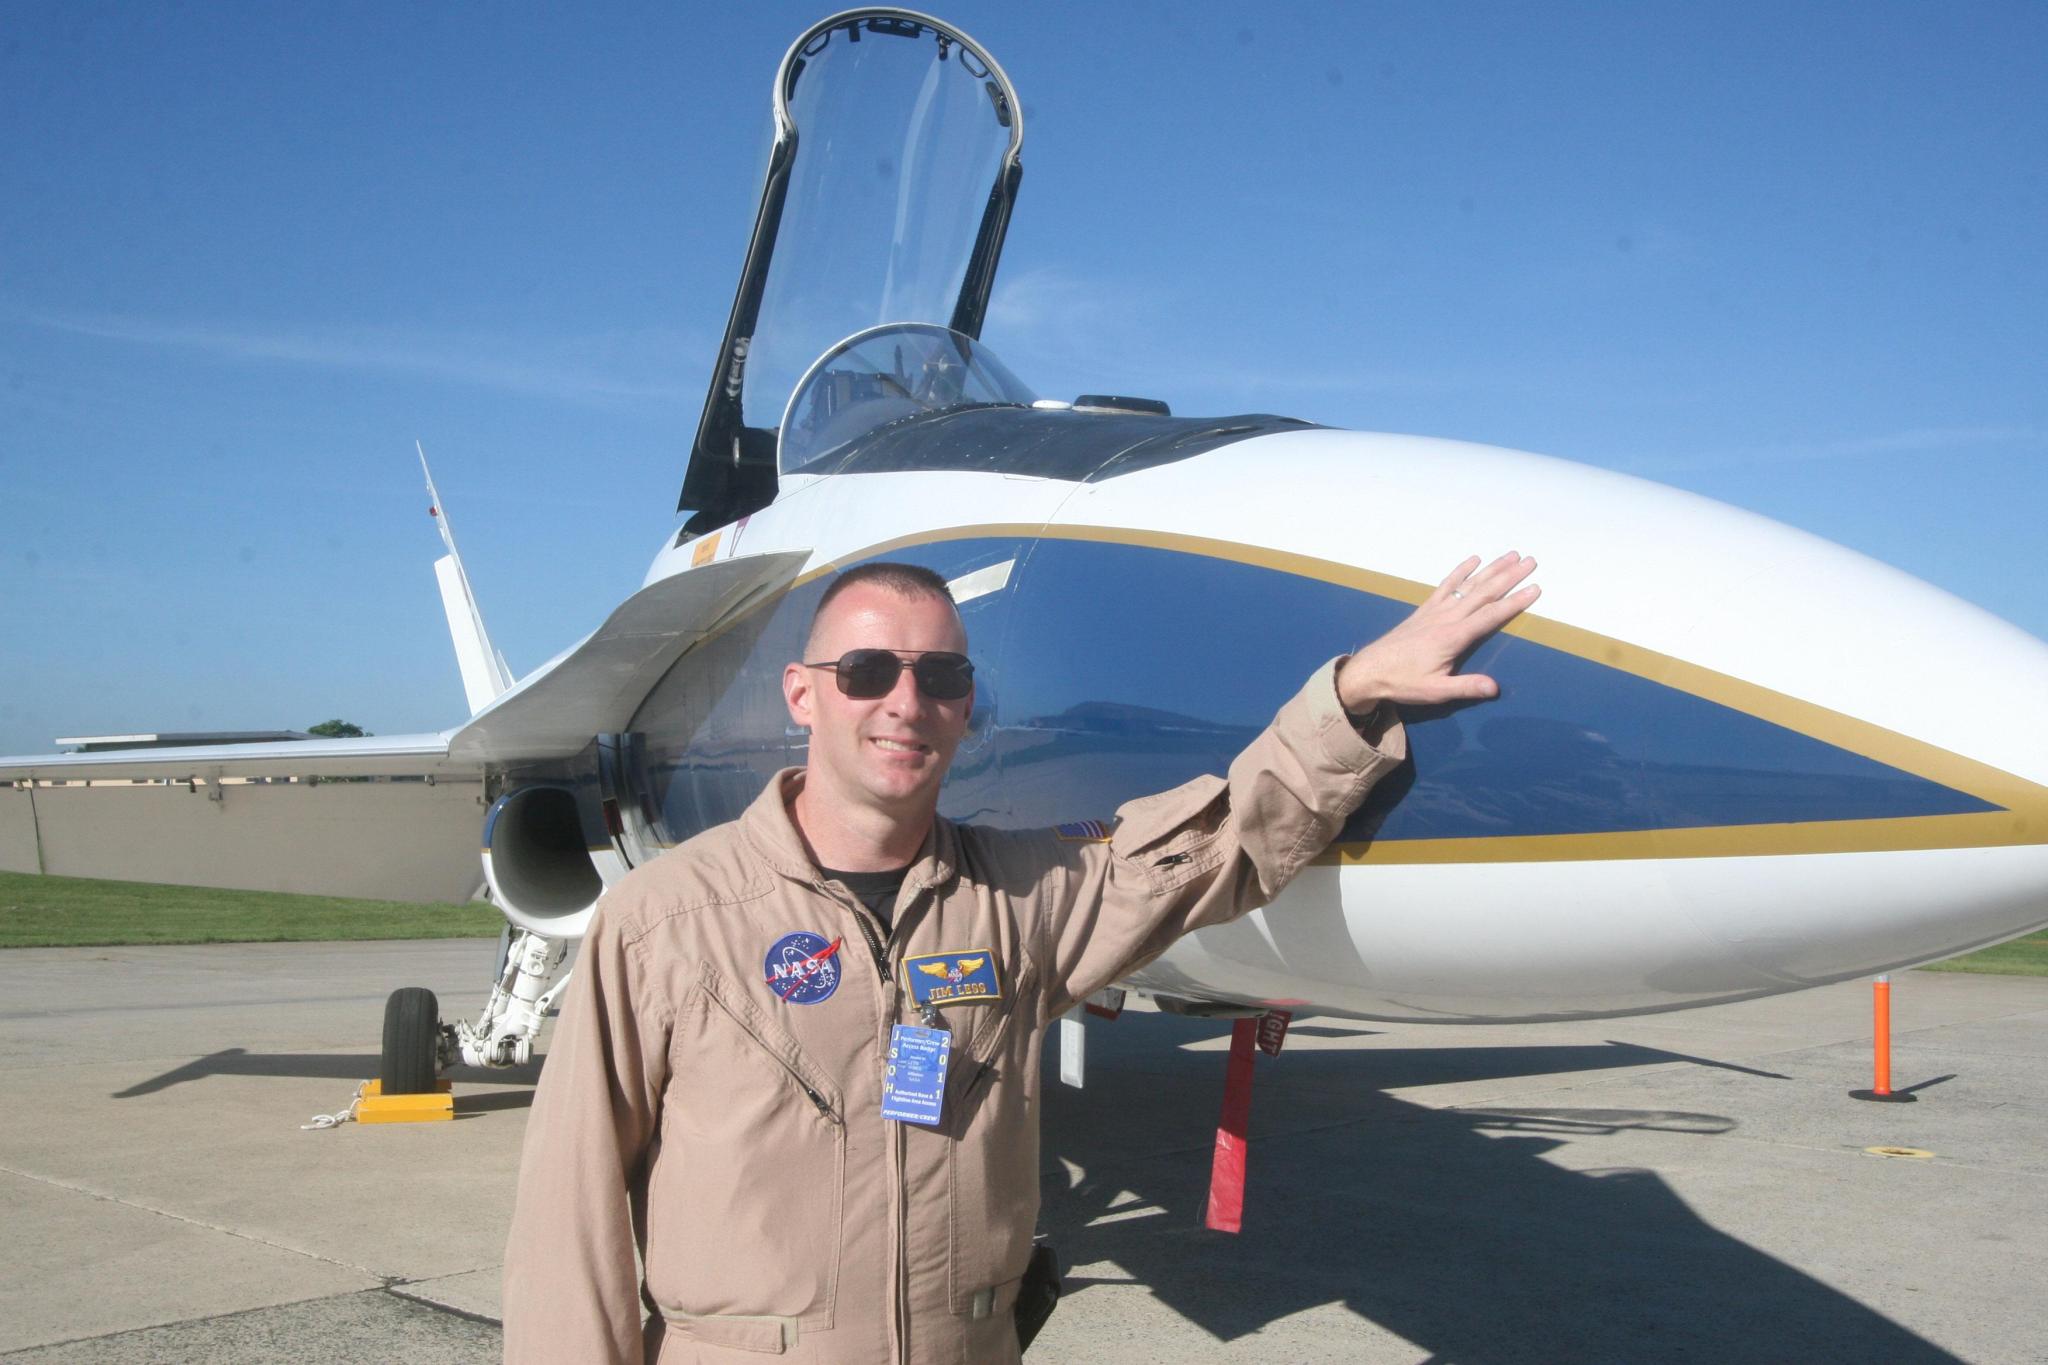 Jim Less, a NASA pilot standing next to an aircraft.